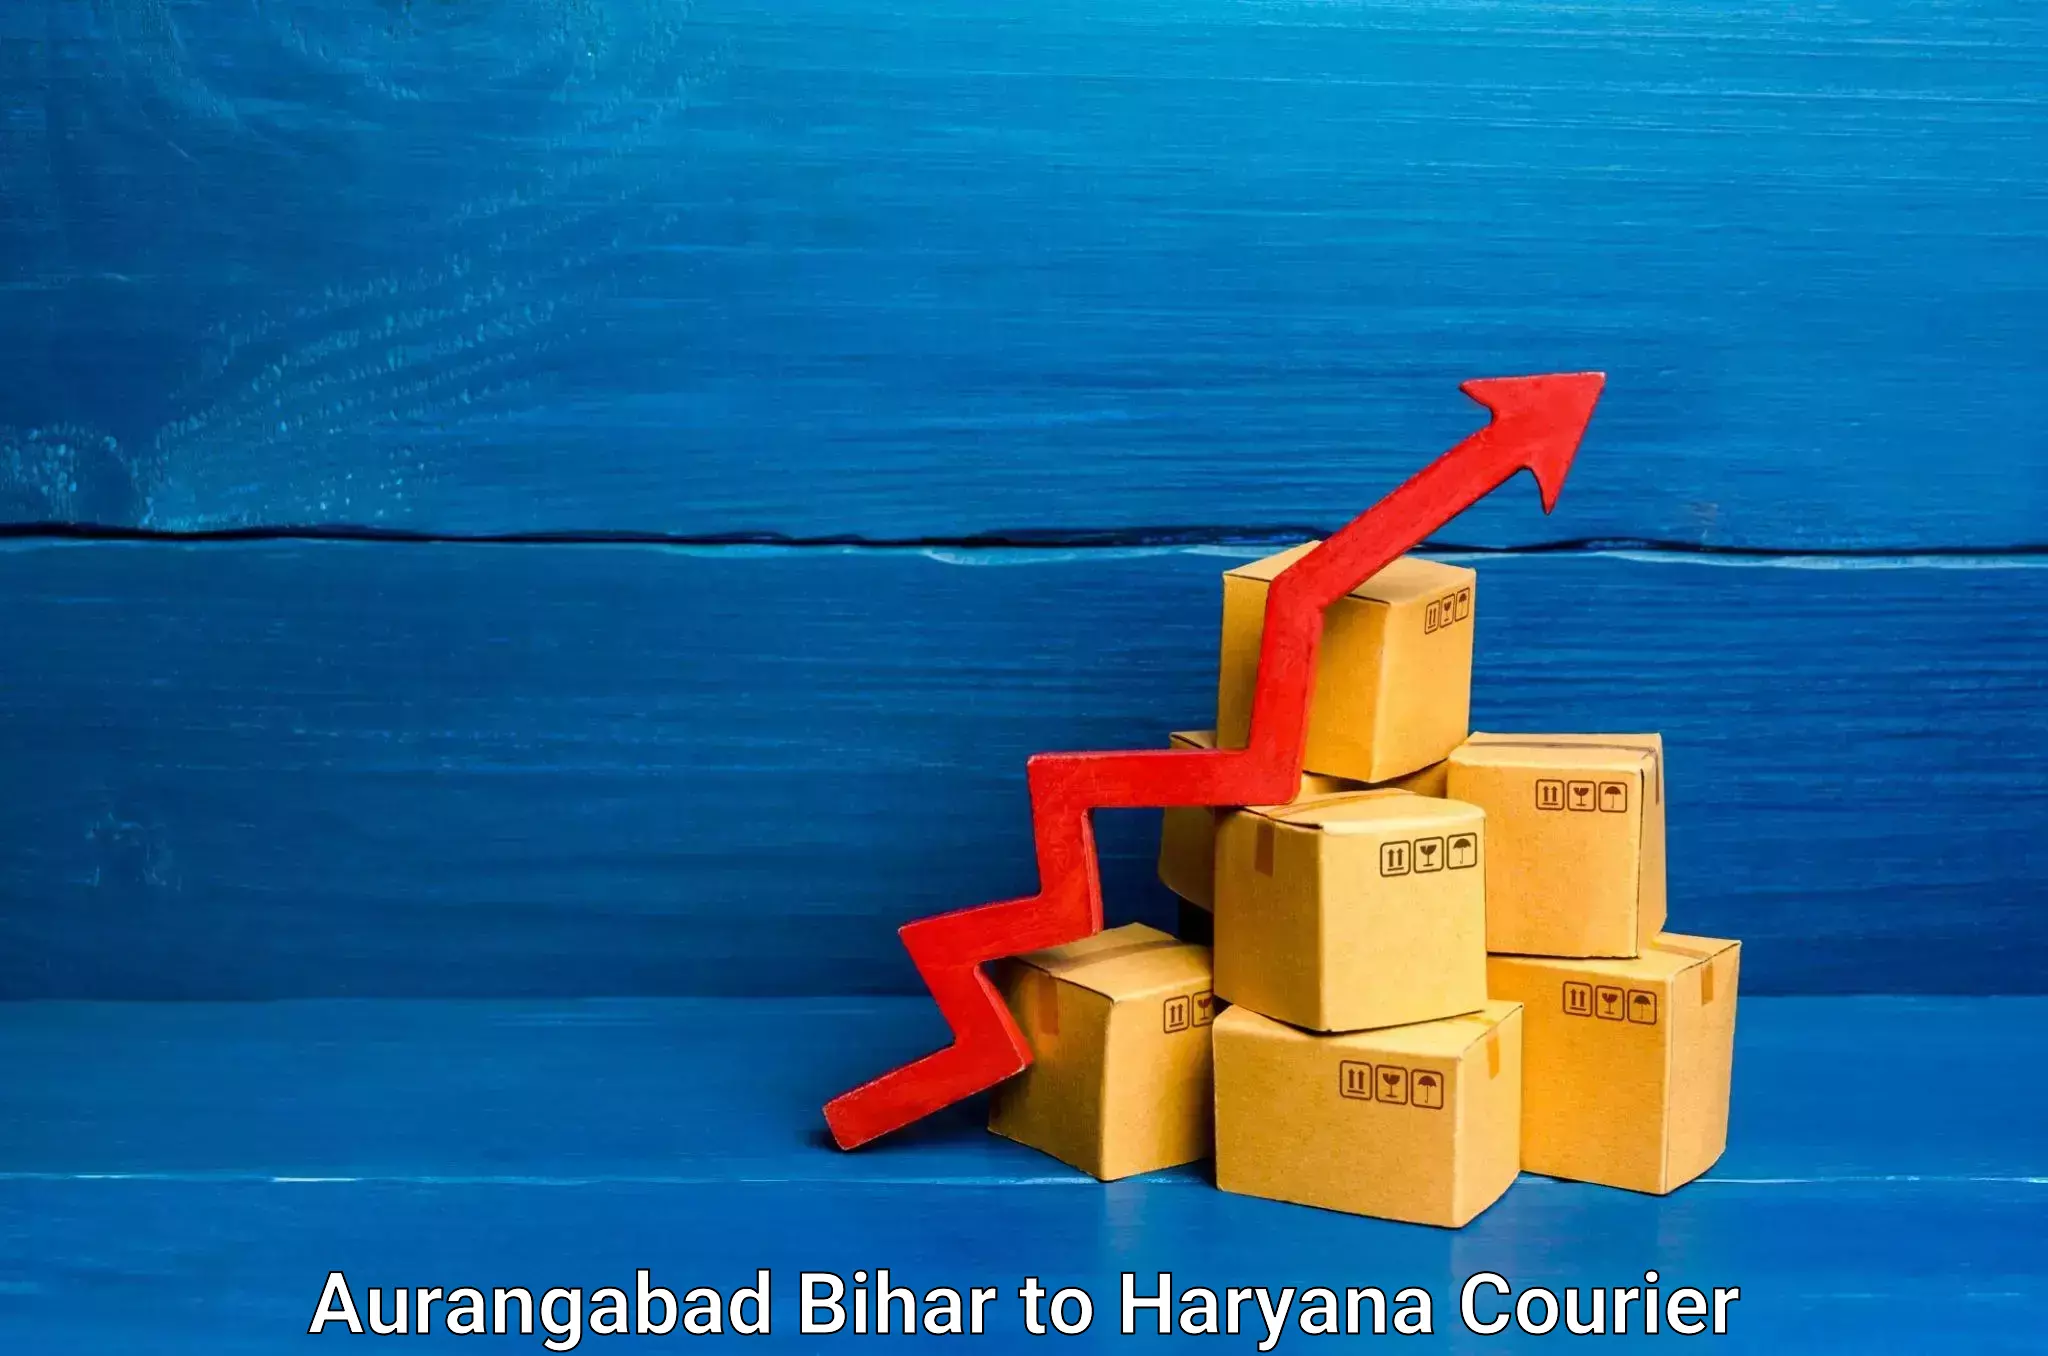 Seamless moving process Aurangabad Bihar to Hansi